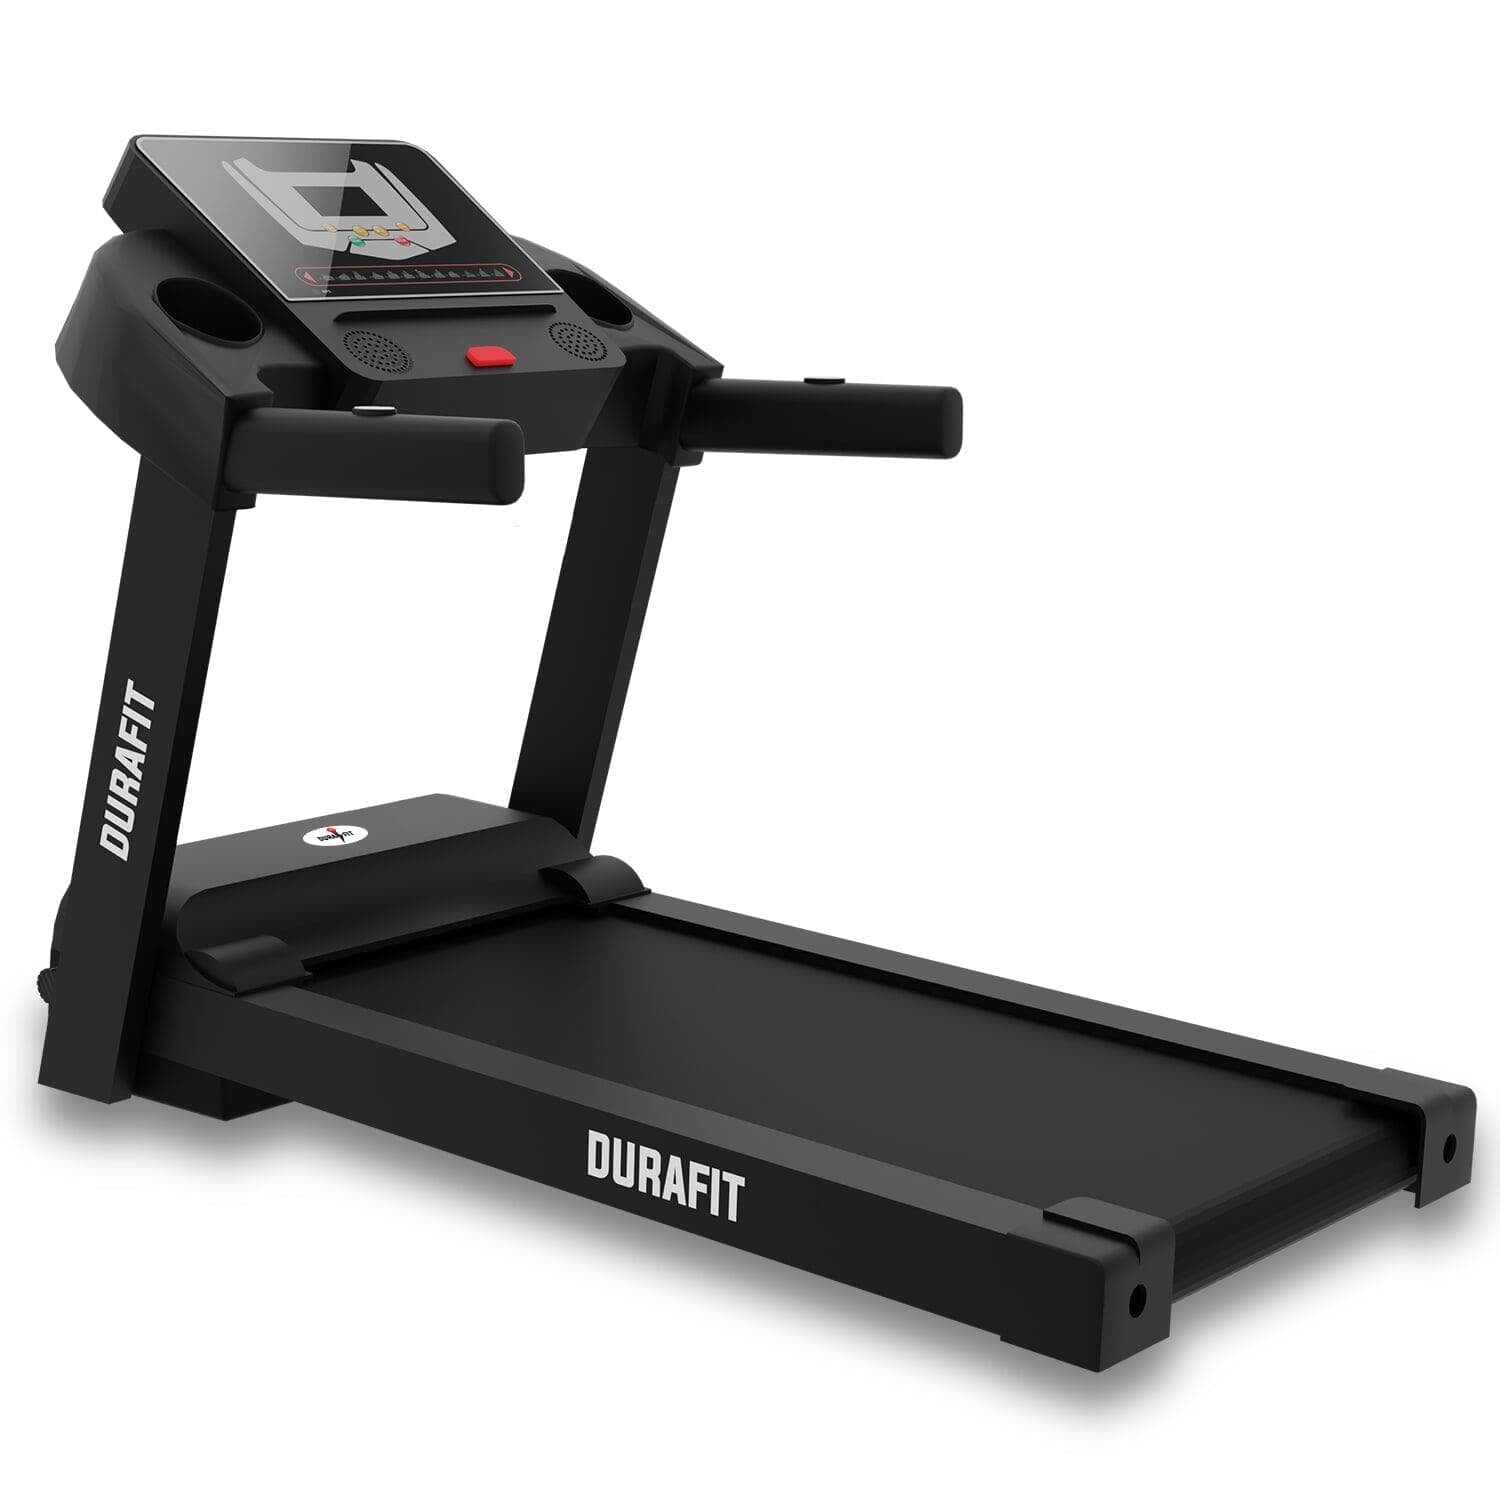 Durafit Panther Treadmill